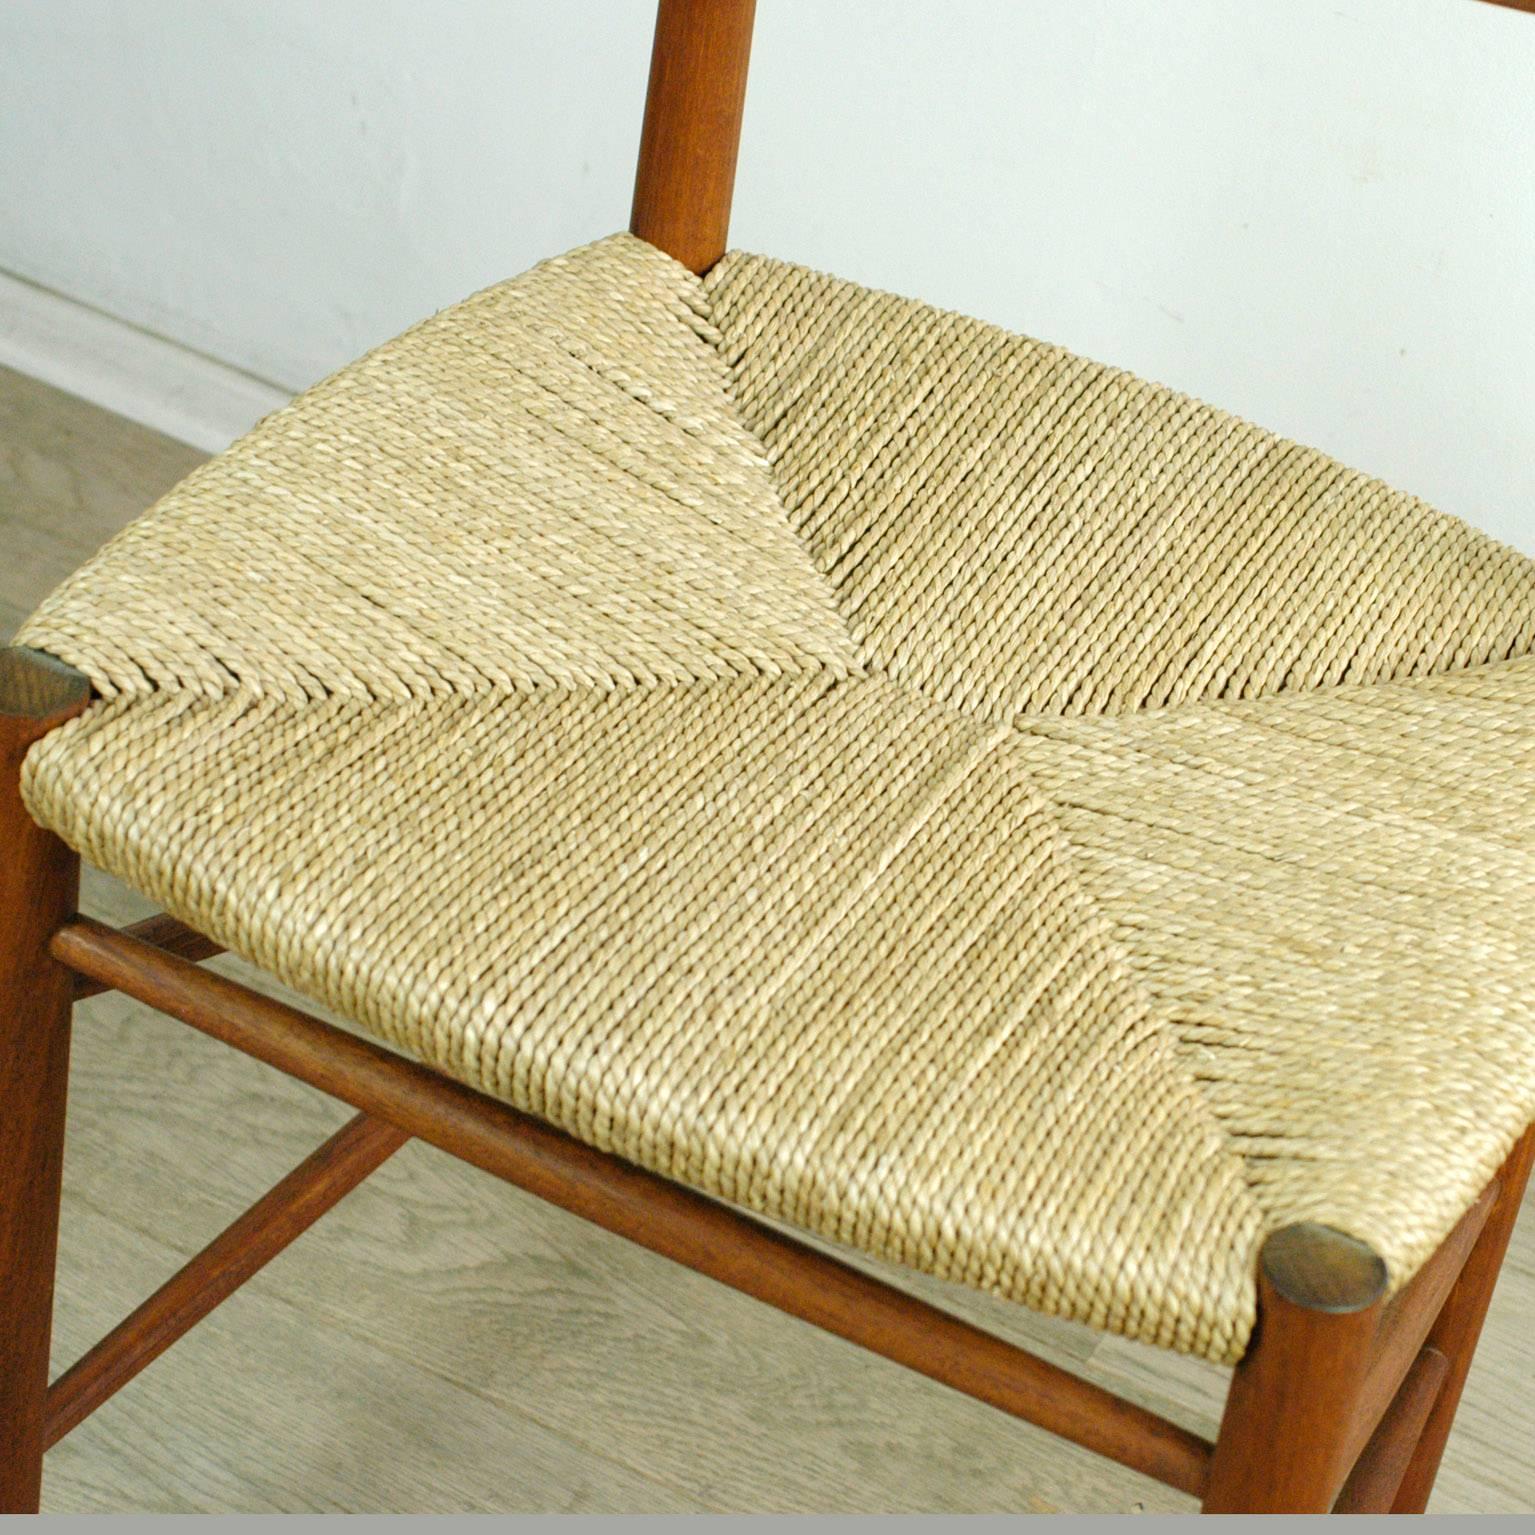 Mid-20th Century Scandinavian Modern Mod. 313 Teak Chair designed by Peter Hvidt